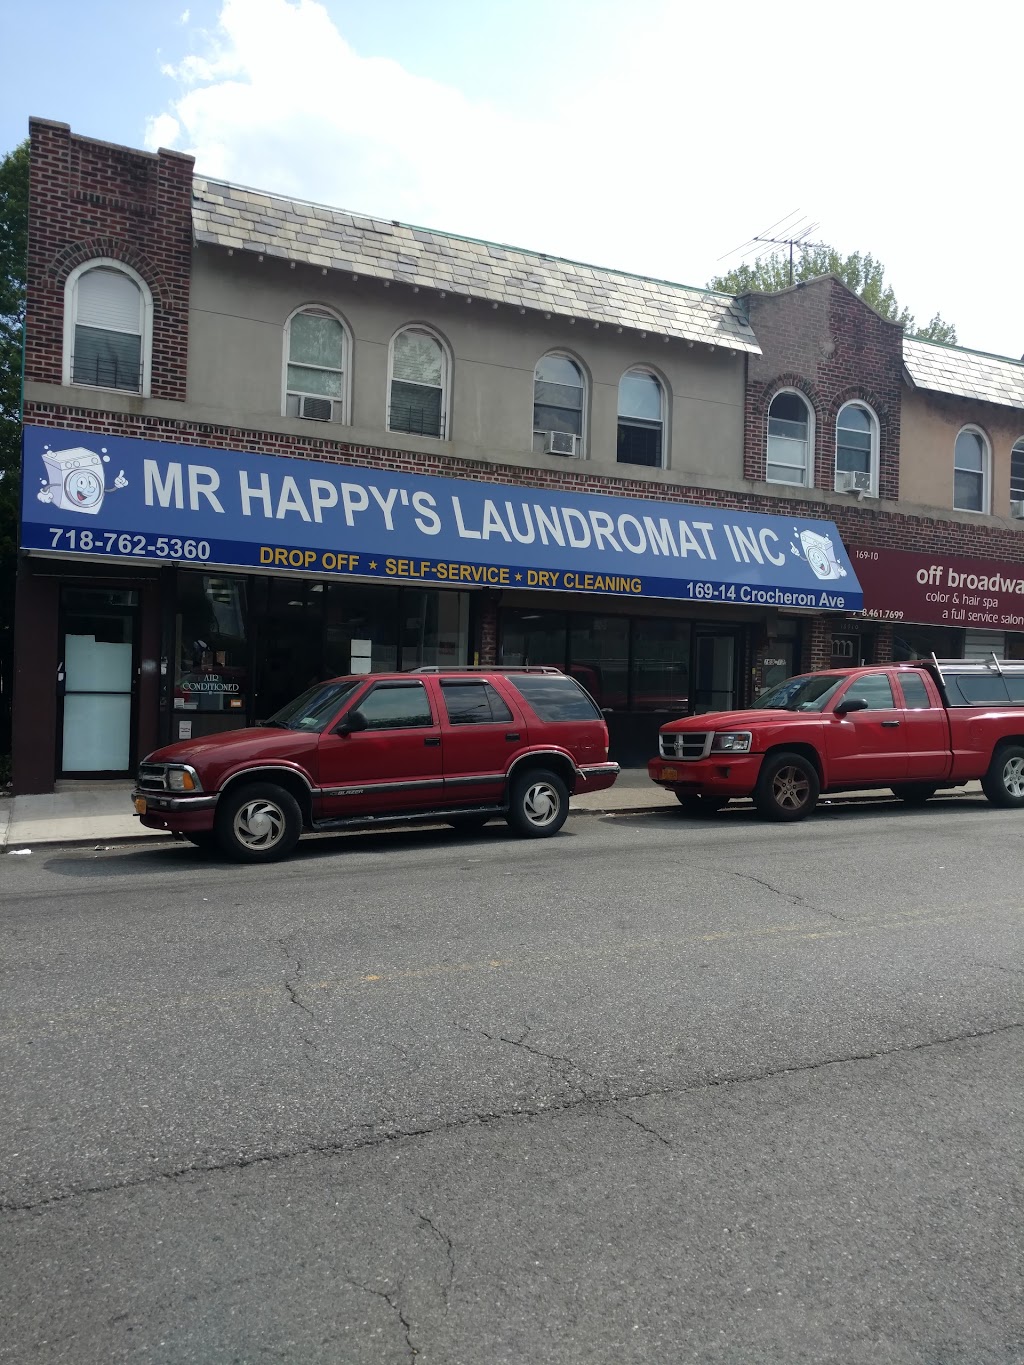 Laundromat Crocheron | 169-14 Crocheron Ave, Queens, NY 11358 | Phone: (718) 762-5360